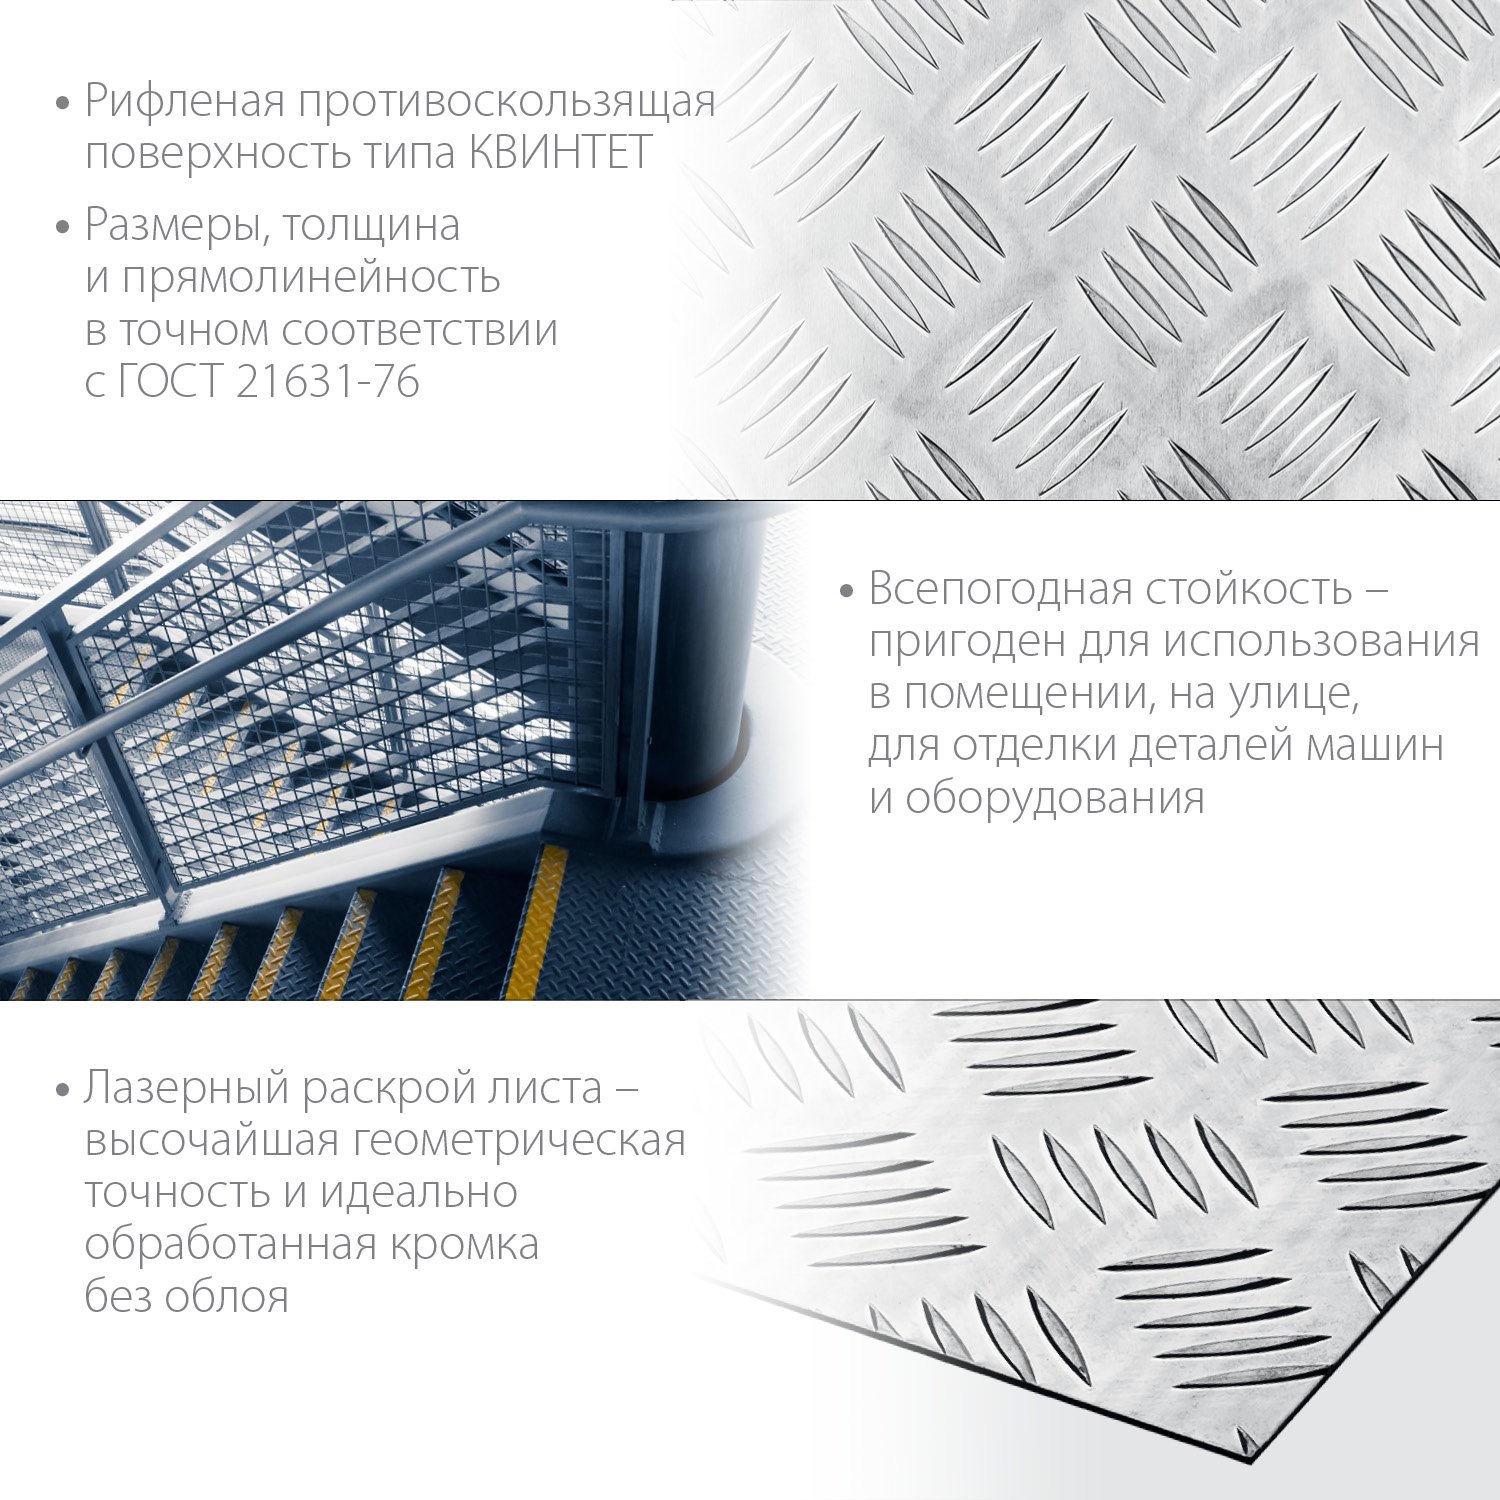 Алюминиевый рифленый лист ЗУБР Квинтет 300х600 х1.5 мм (53833)